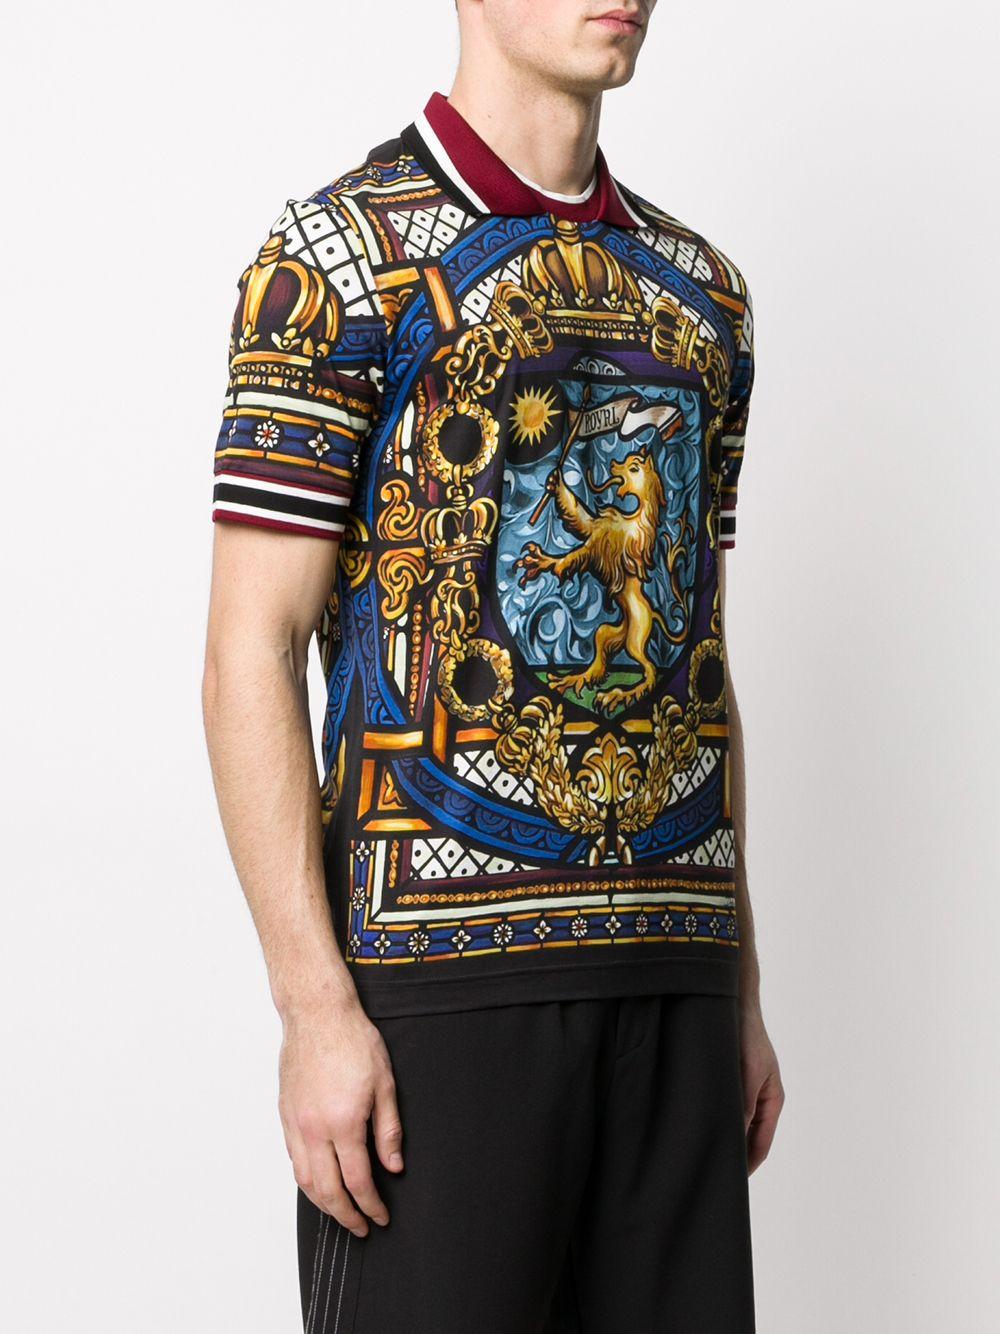 Dolce & Gabbana Cotton Lion Print Polo Shirt in Black for Men - Lyst